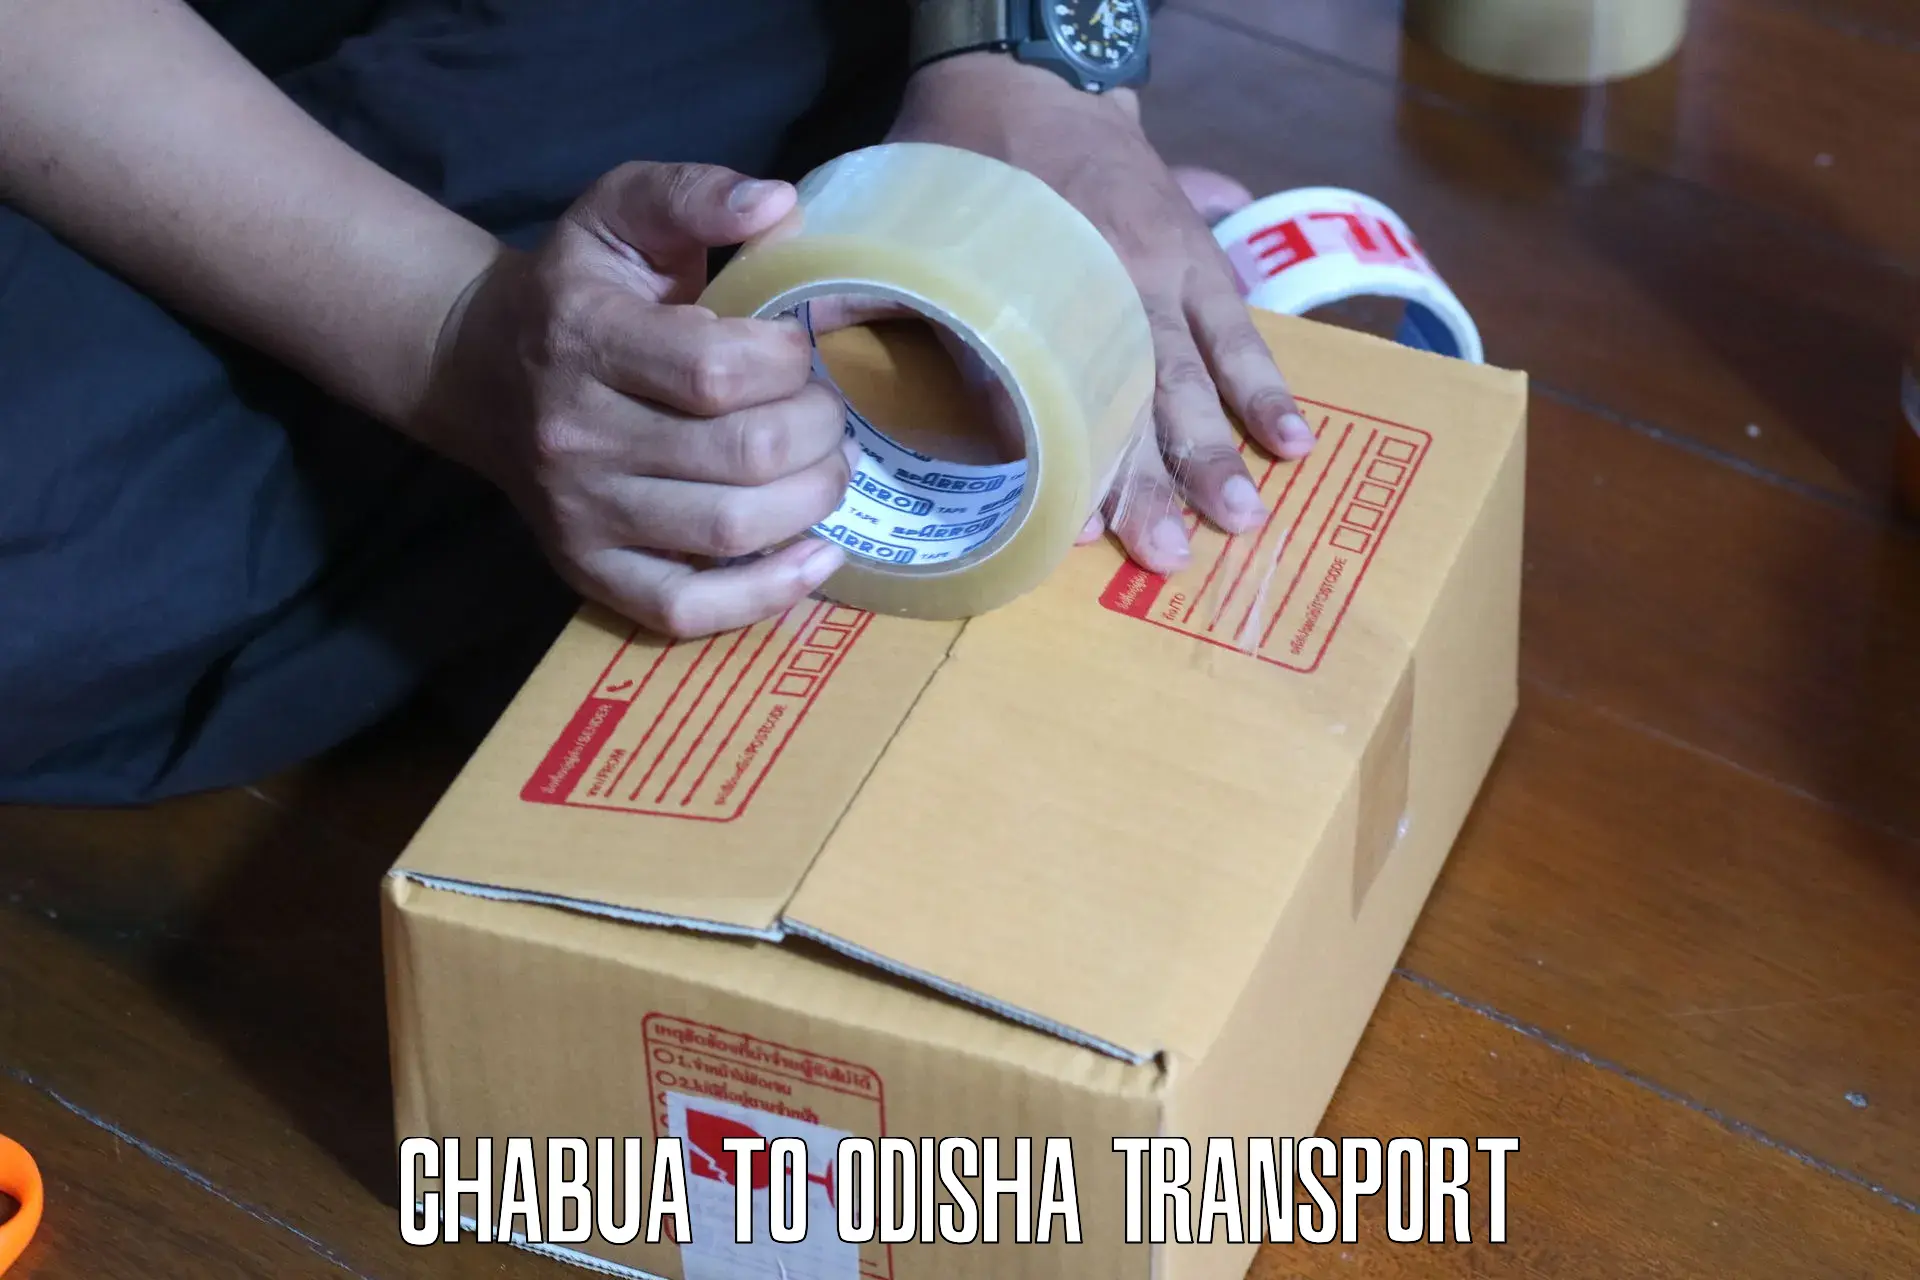 Sending bike to another city Chabua to Kosagumuda